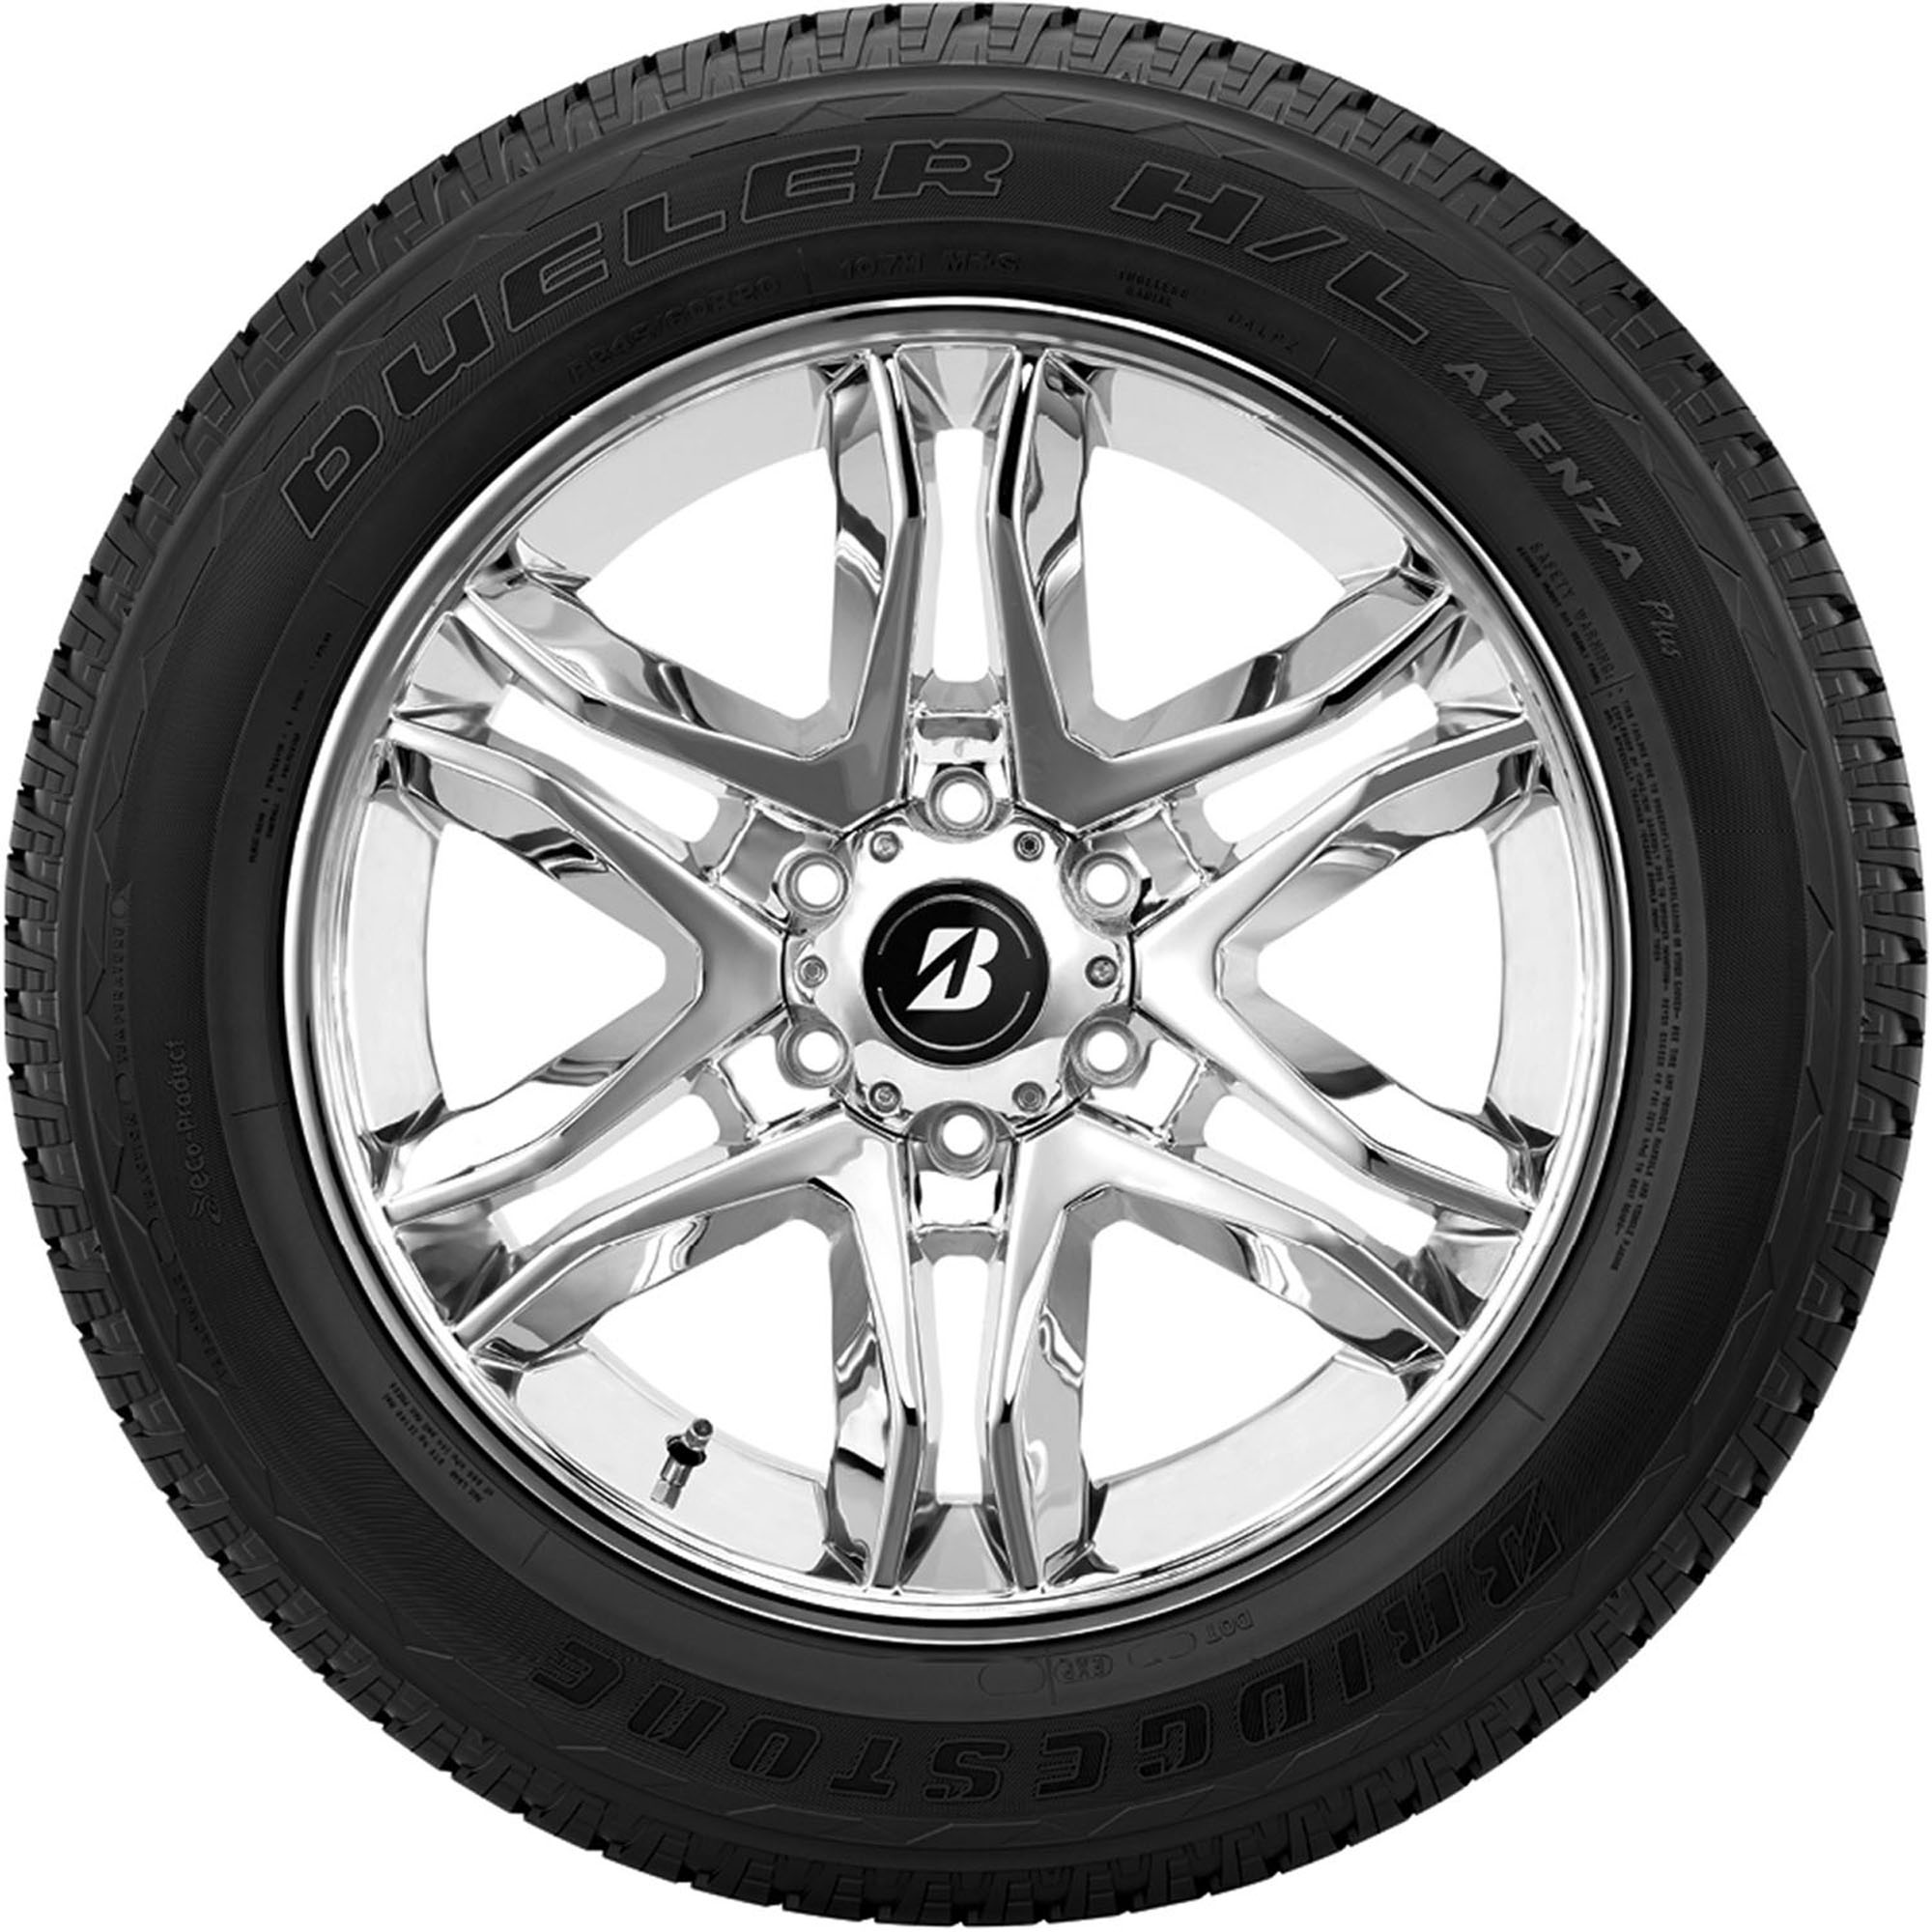 Bridgestone Dueler H/L Alenza Plus All Season P275/55R20 111H SUV/Crossover Tire - image 2 of 6